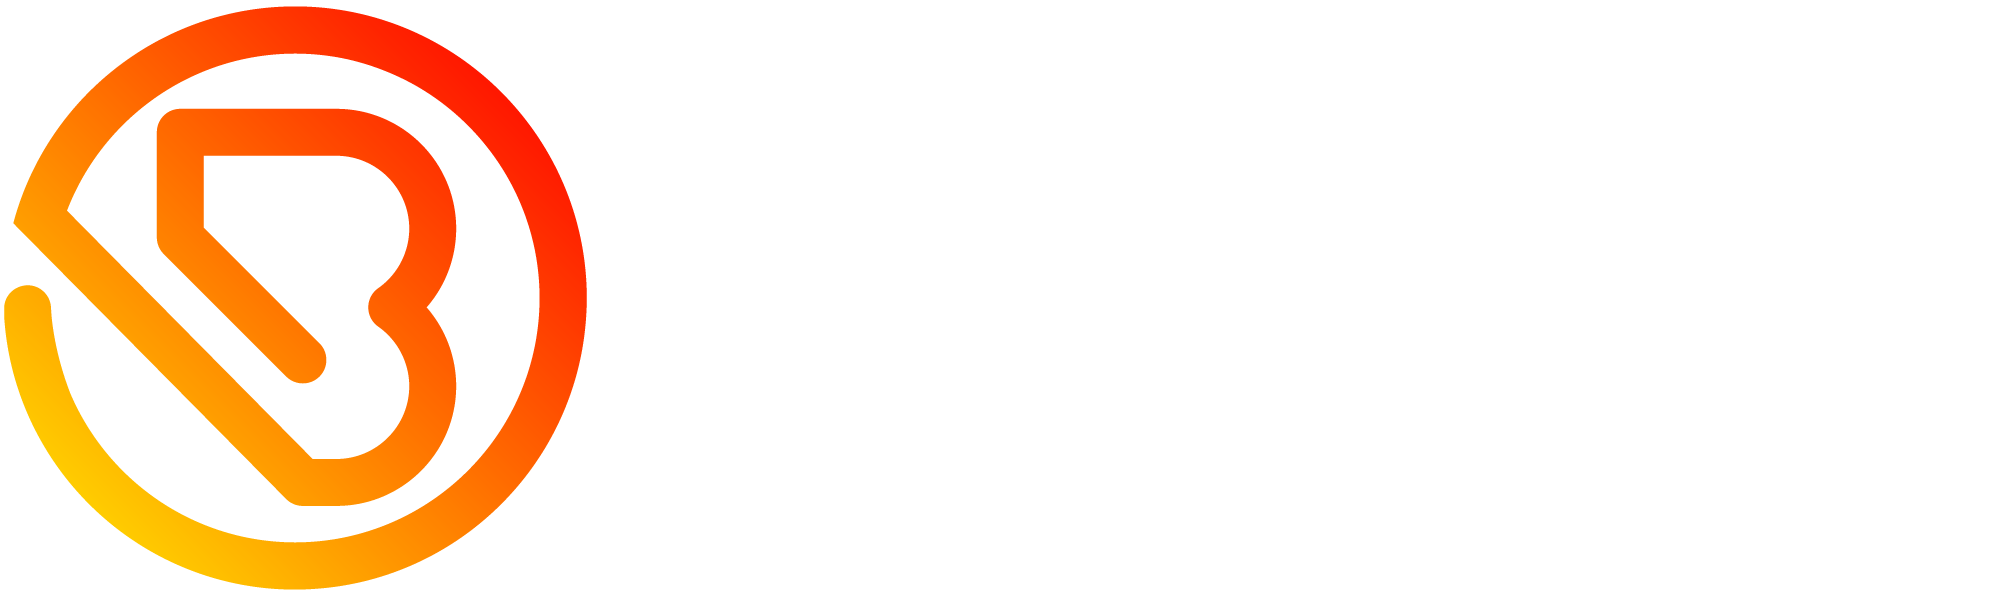 Beta Arrays